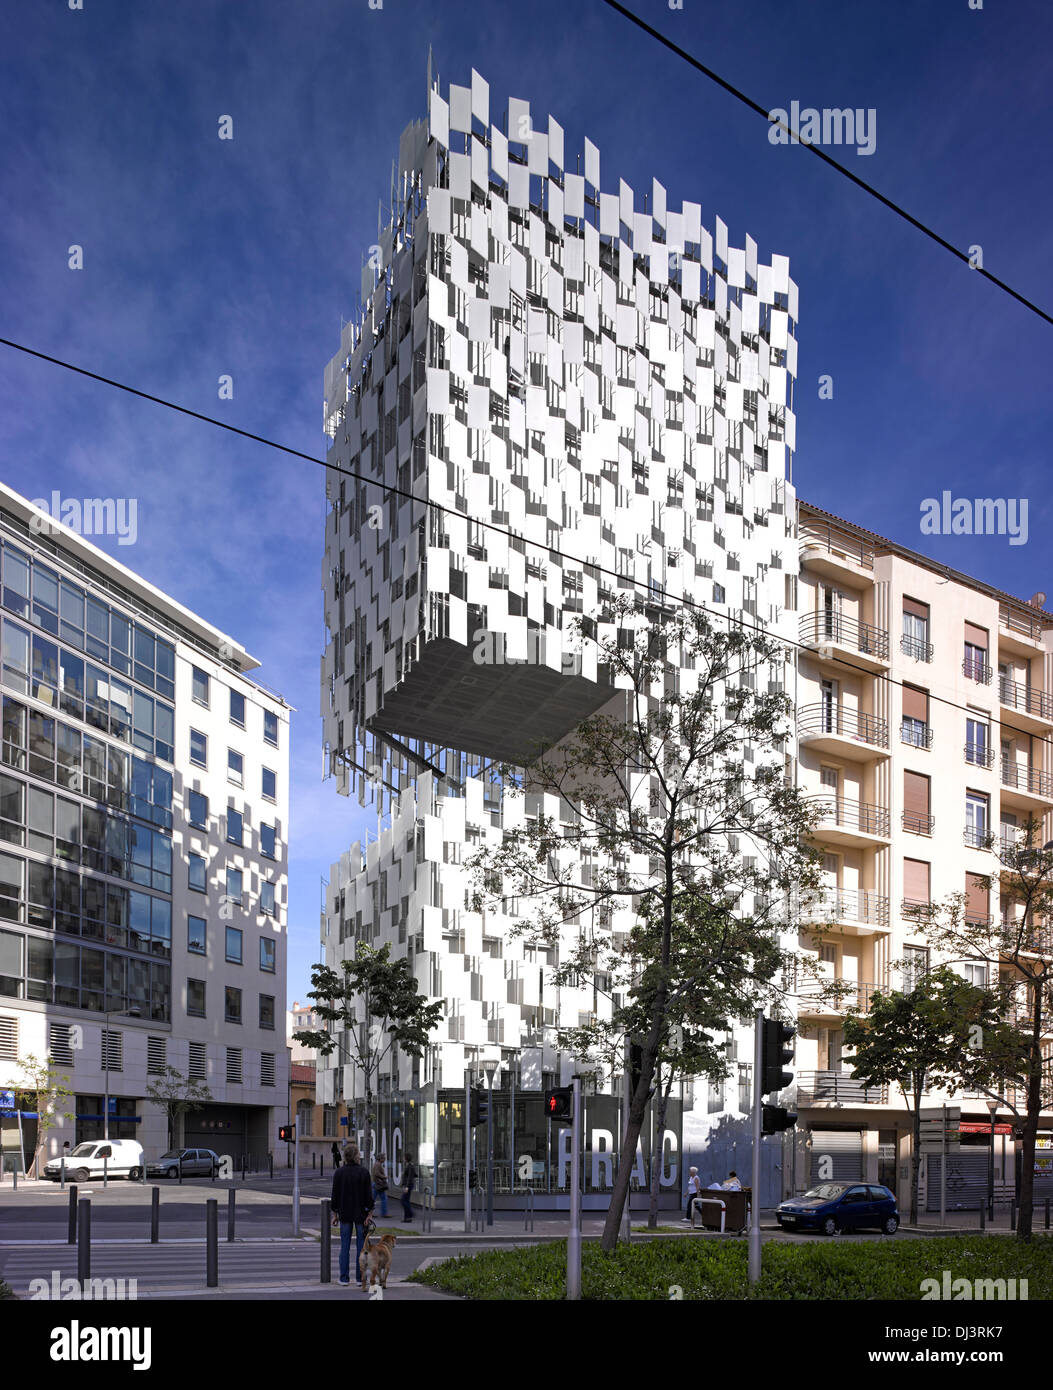 FRAC, Marseille, France. Architect: Kengo Kuma, 2013. Overall Exterior View. Stock Photo